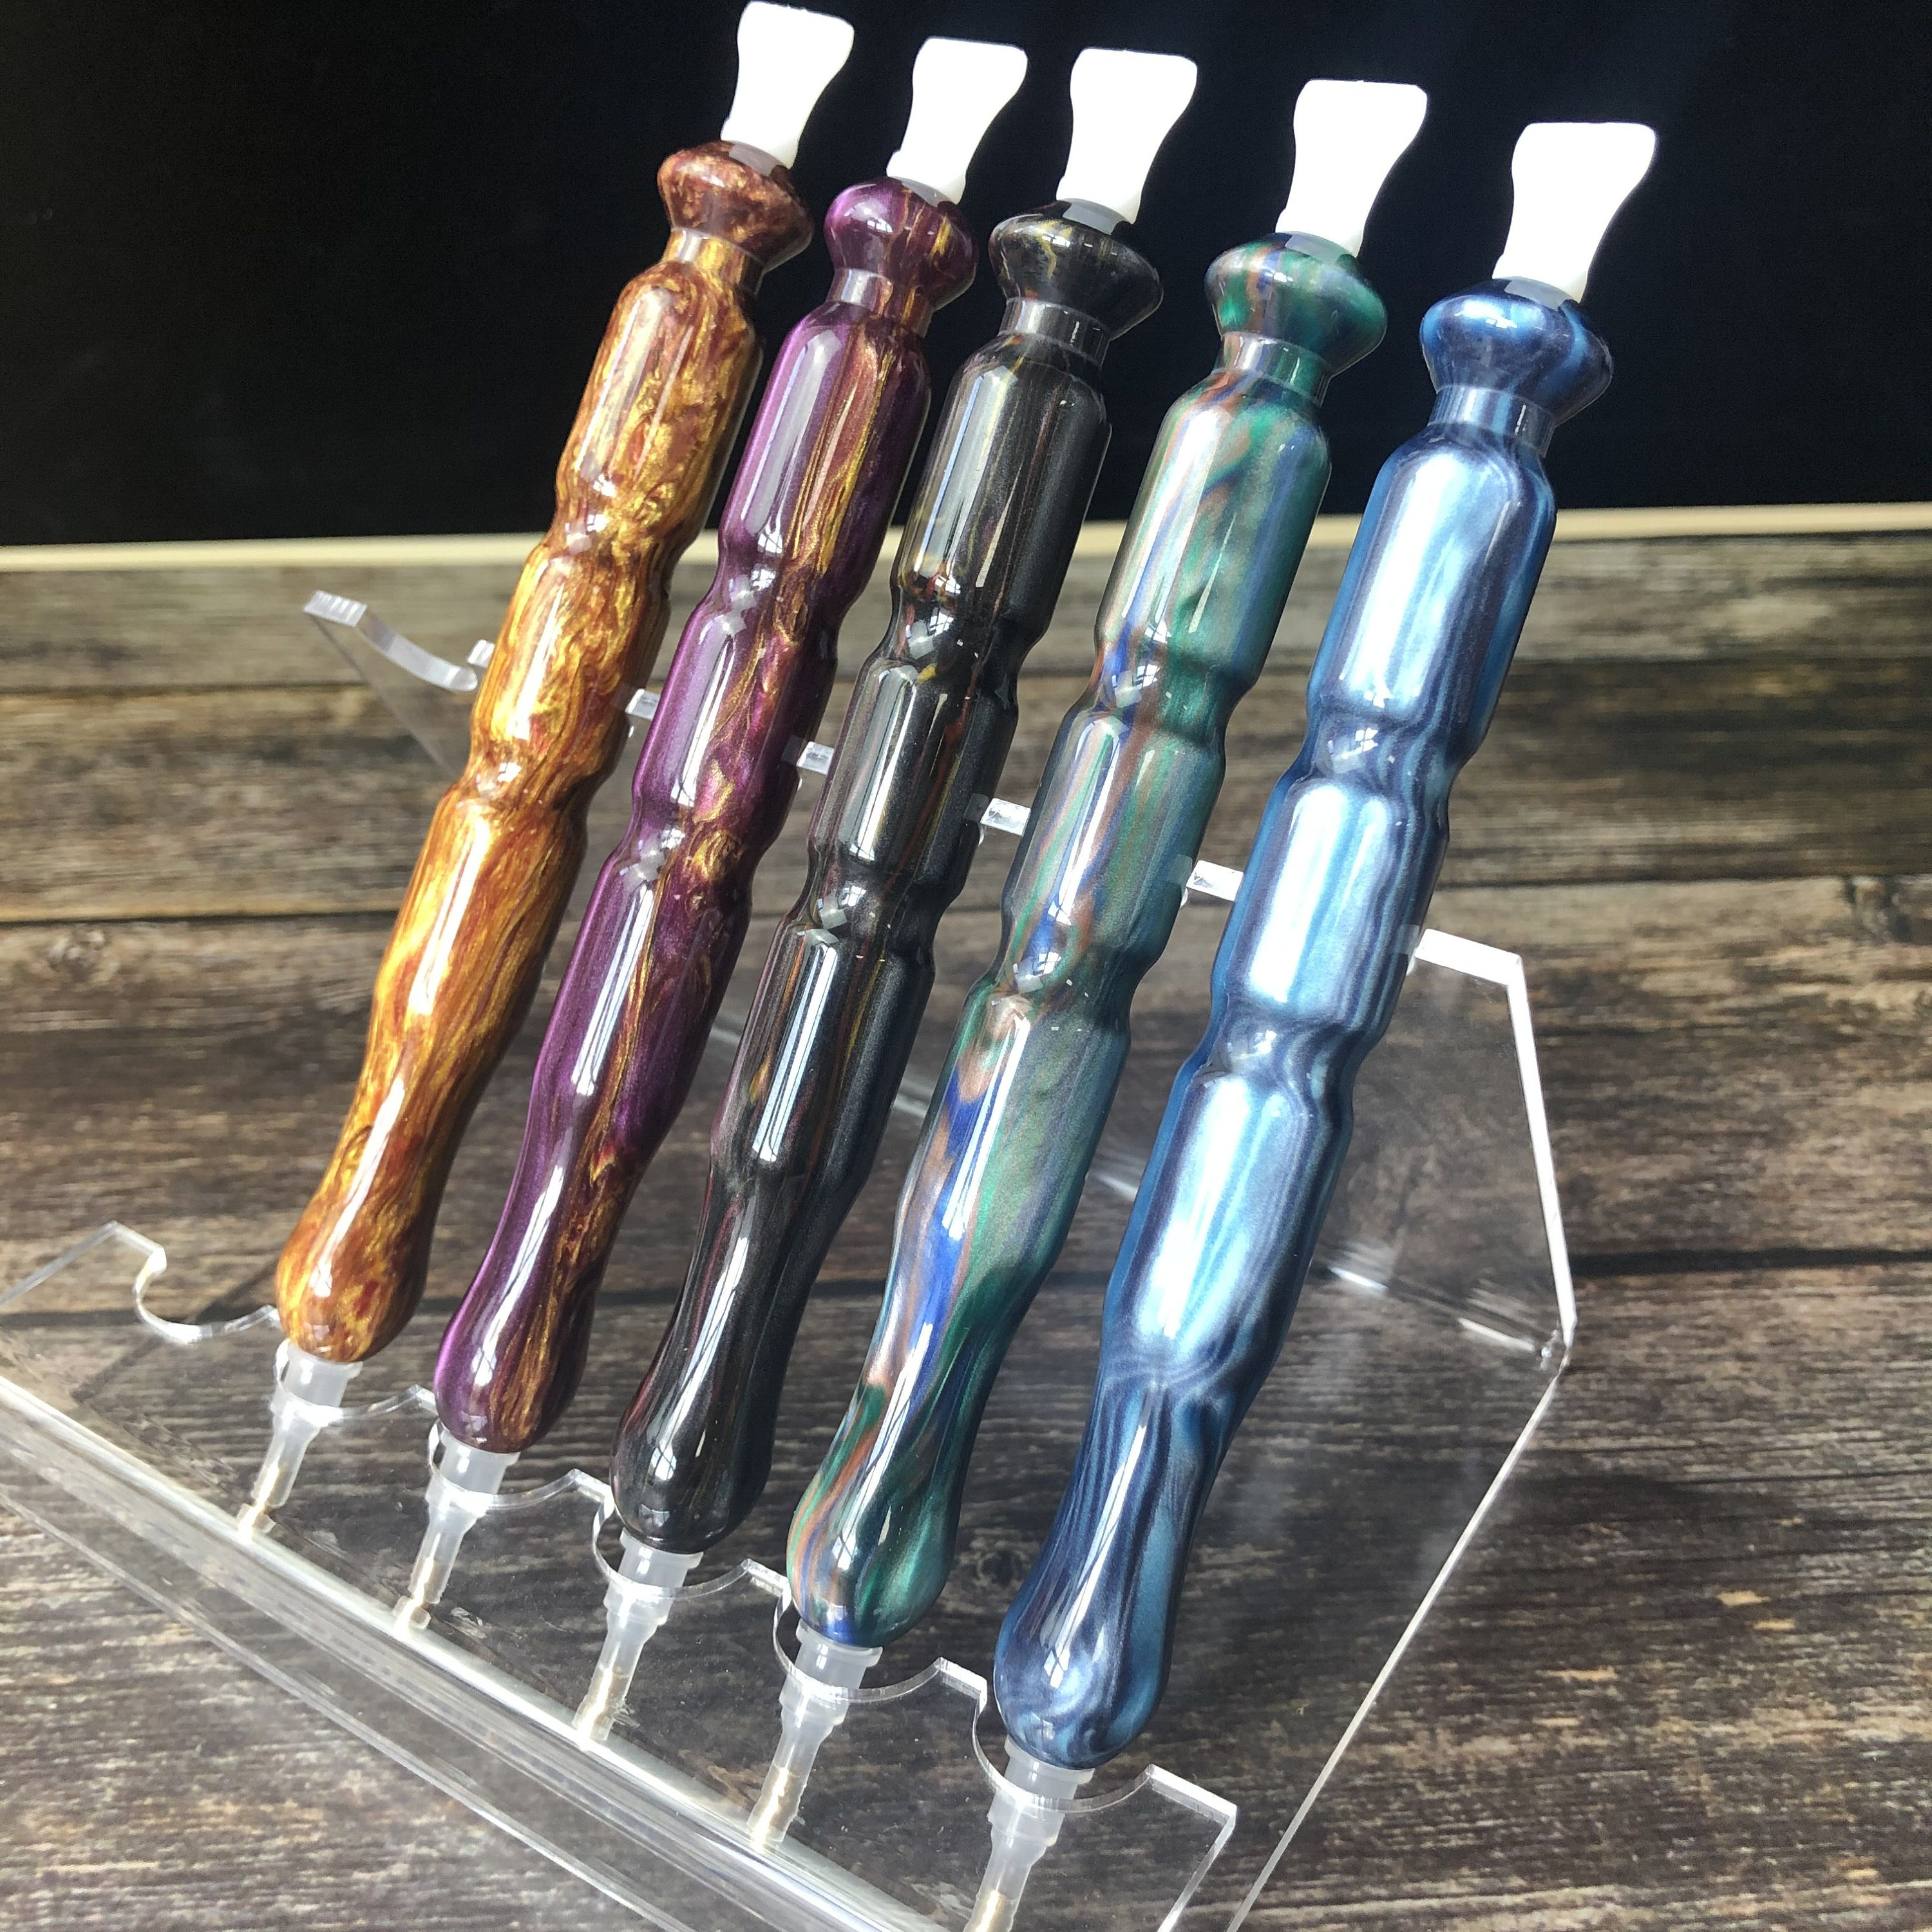 (2 Packs) Diamond Painting Pen, Diamond Art Pen, Handmade Resin 5D Diamond Painting Art Drill Pen Kit Tool Accessory with 14 Multi Placer Tips for